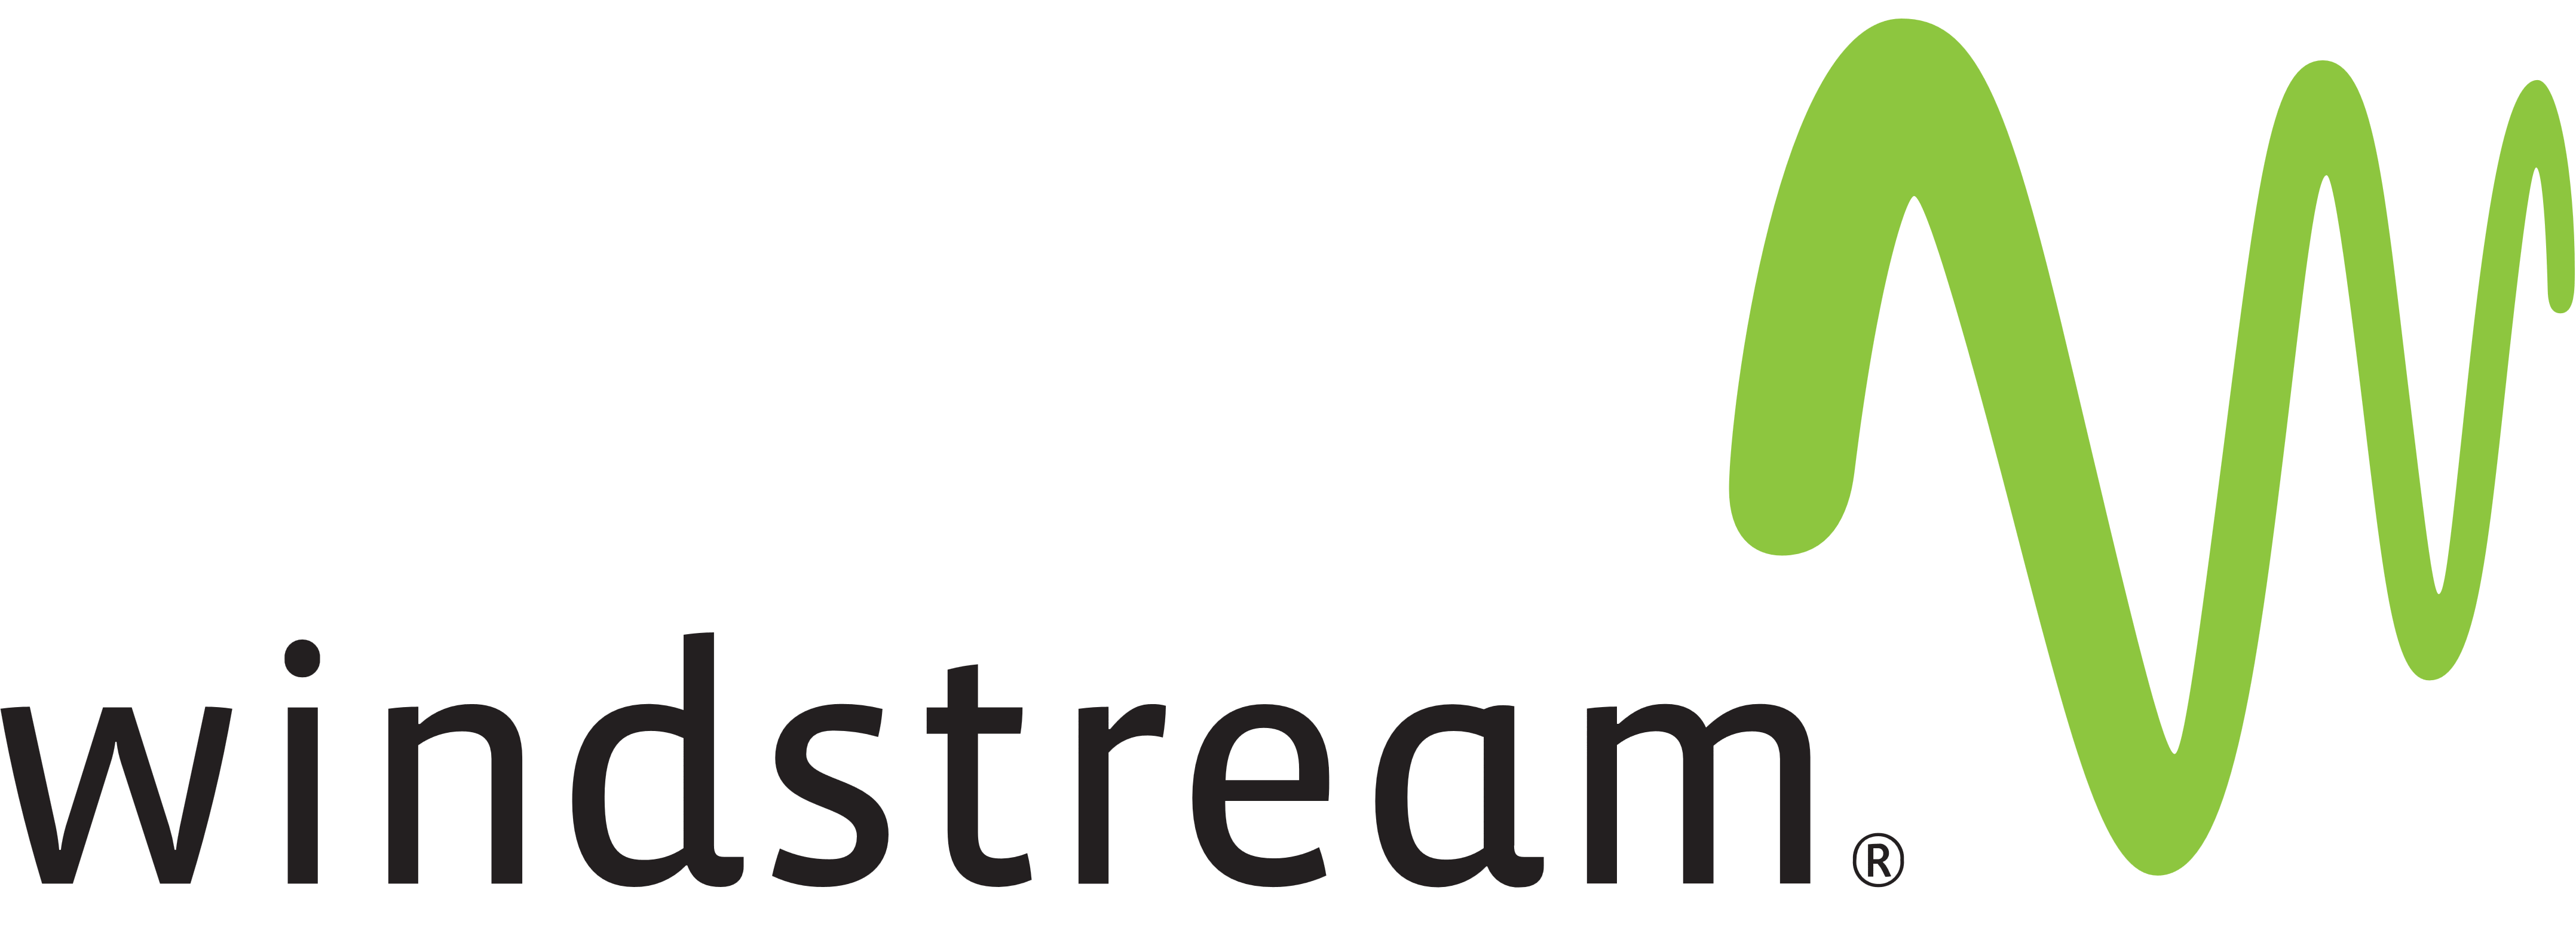 Windstream Logo - Windstream